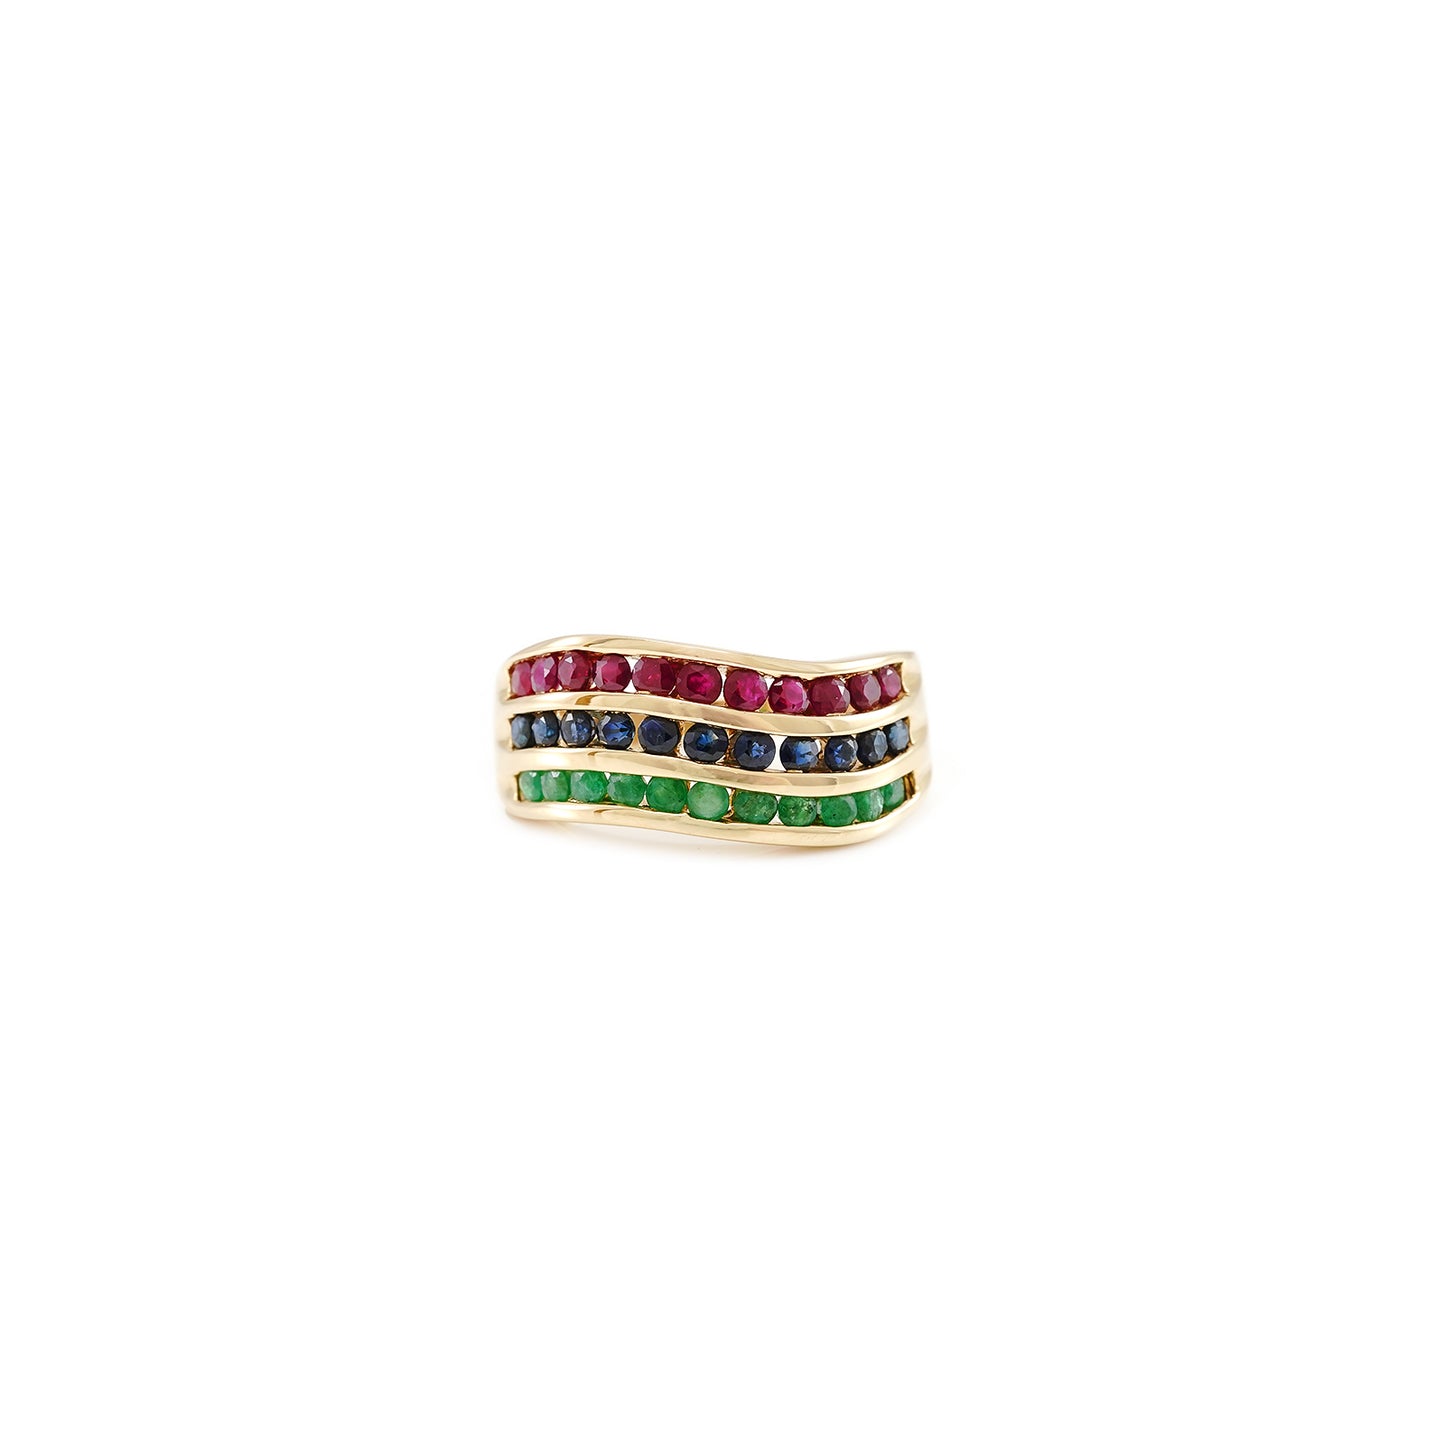 Vintage Edelsteinring Saphir Smaragd Rubin Gelbgold 14K Goldring gemstone ring